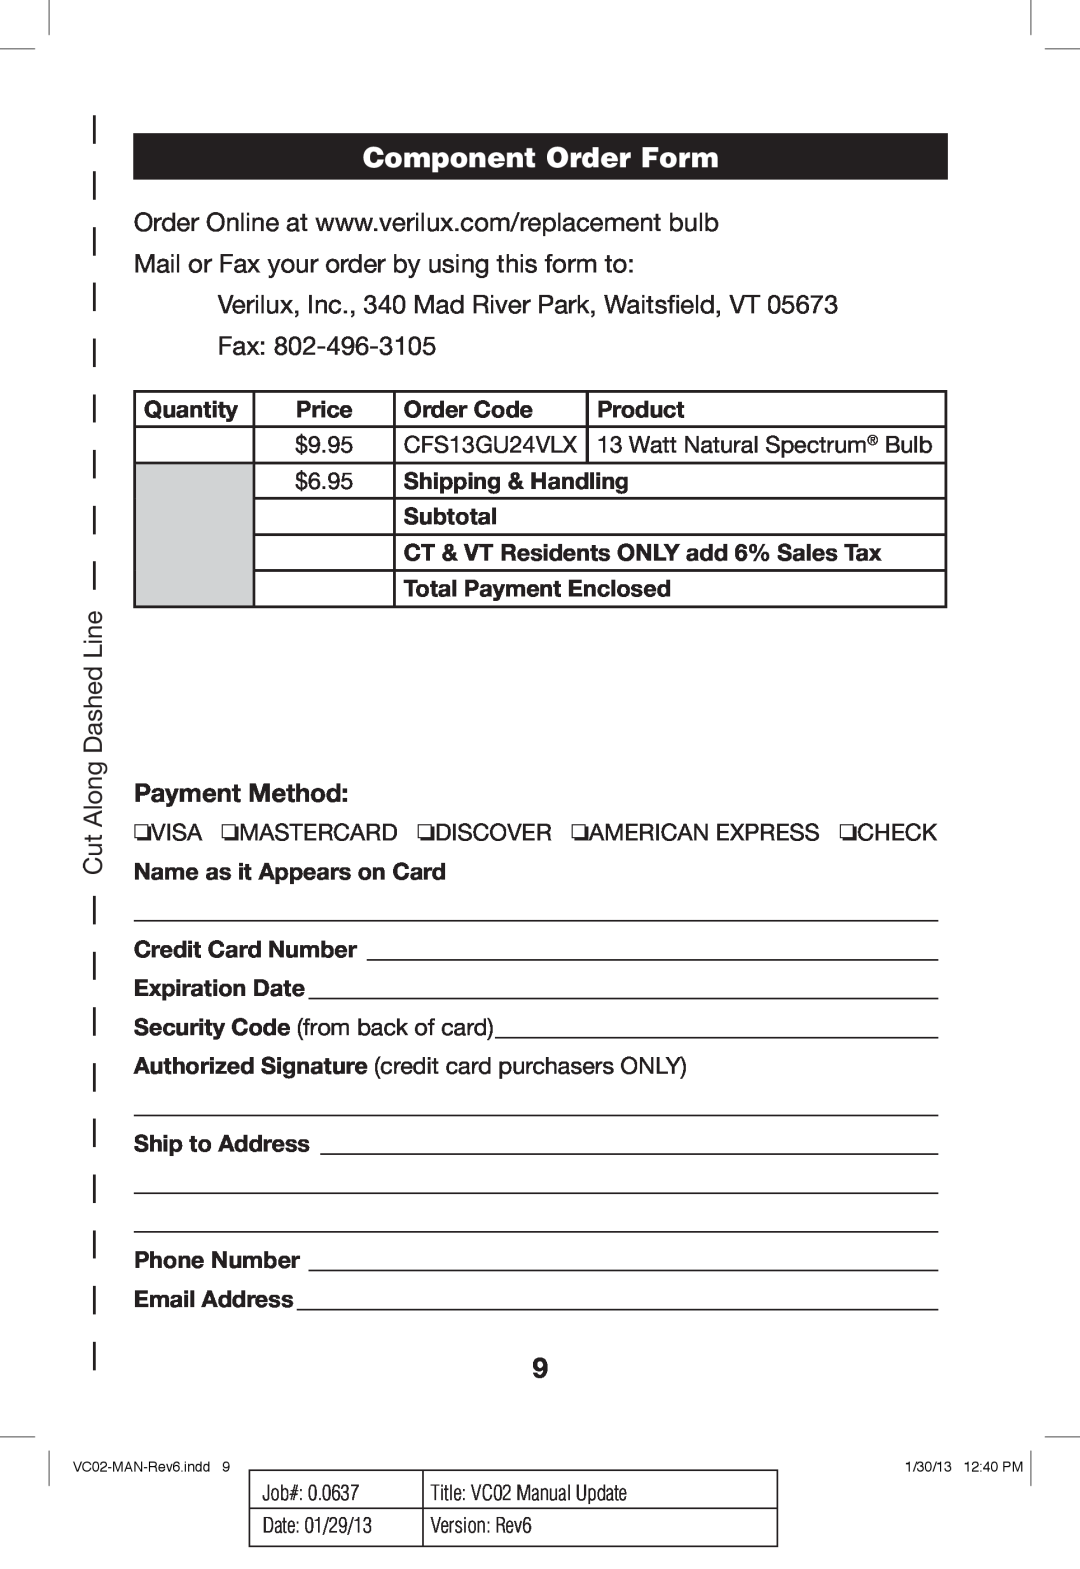 Verilux VC02 manual Component Order Form, Payment Method 